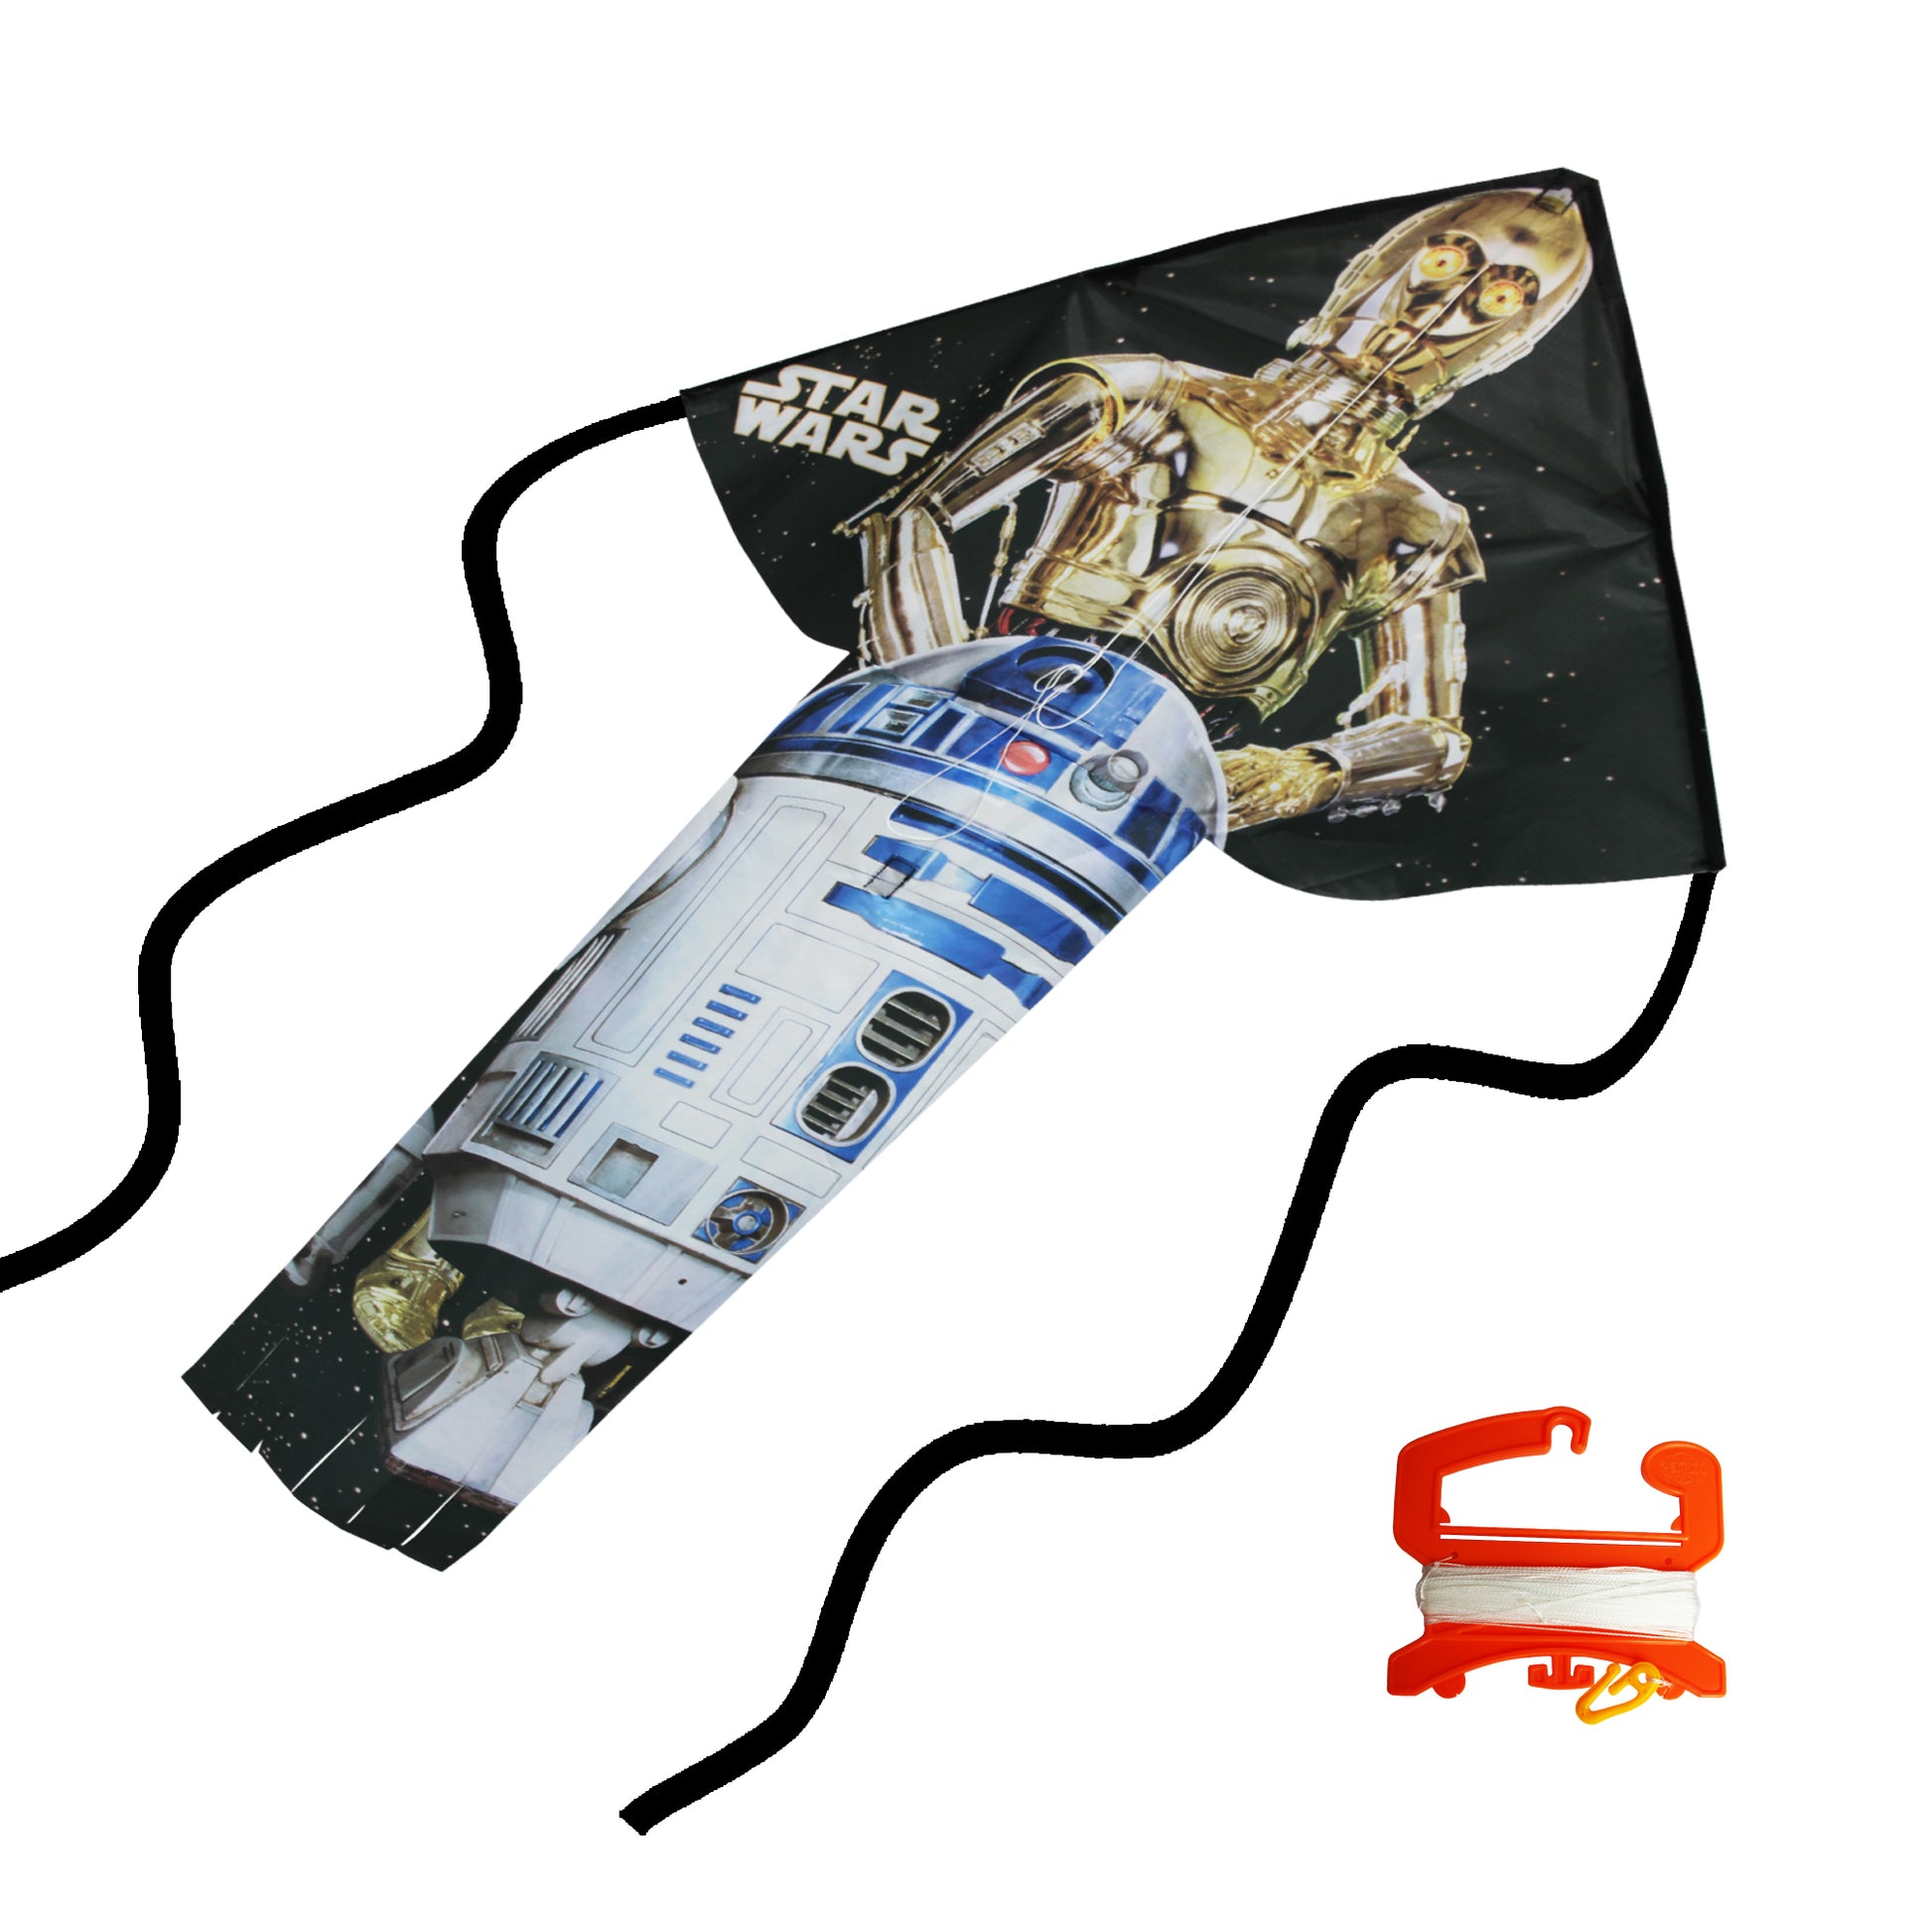 WindNSun Breezy Fliers 57 Star Wars Droids Nylon C3PO & R2D2 Kite photo showing handle